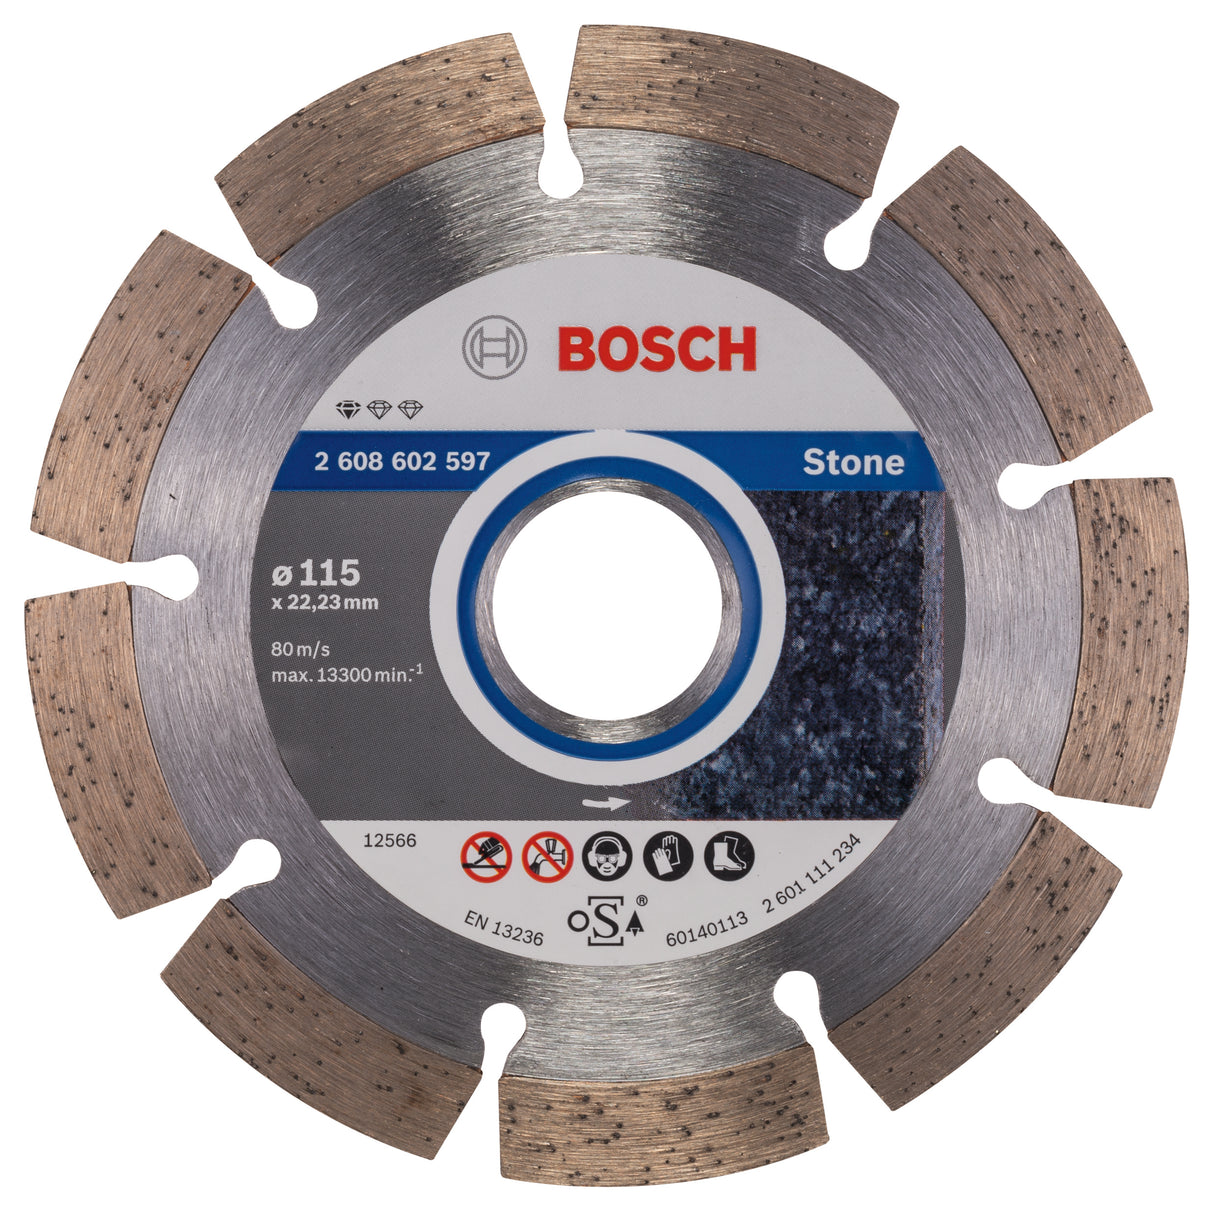 Bosch Professional Diamond Cutting Disc for Stone - 115 x 22.23 x 1.6 x 10 mm